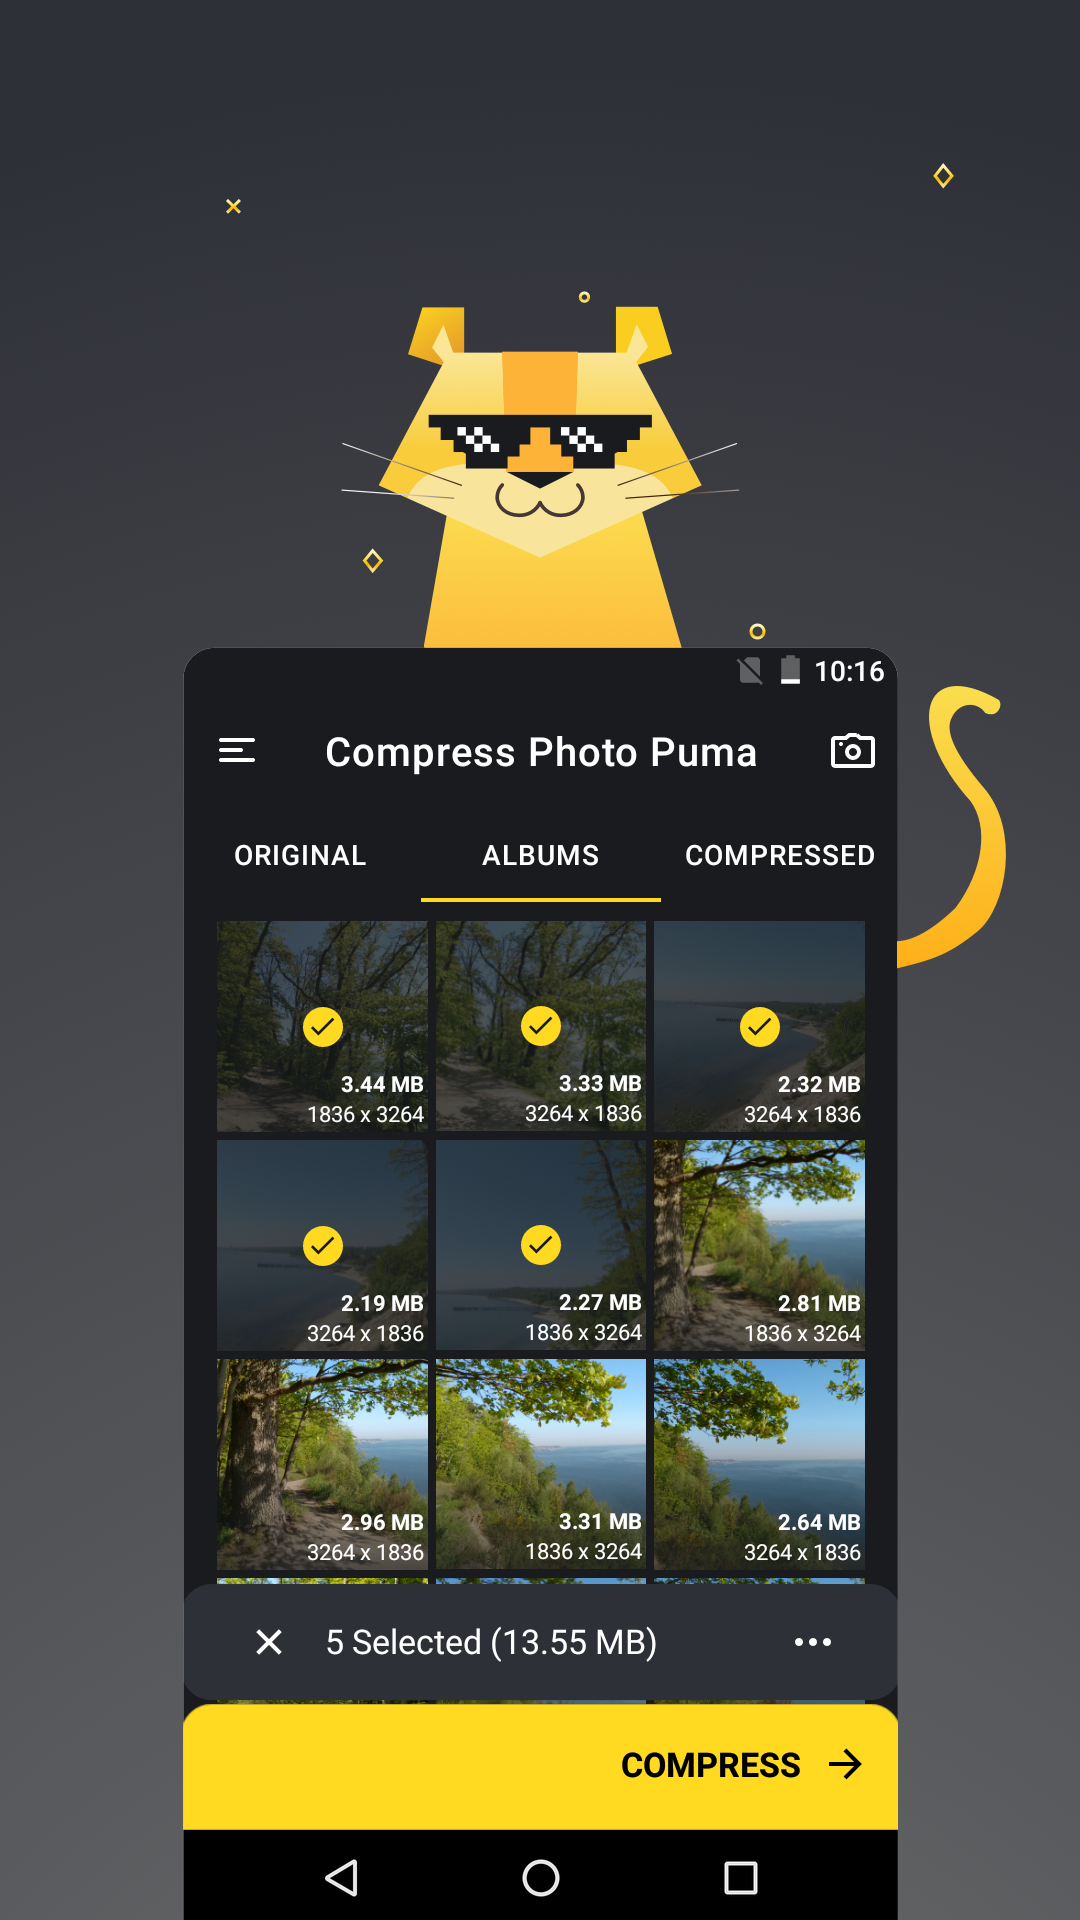 Compress Photo Puma - Main screen